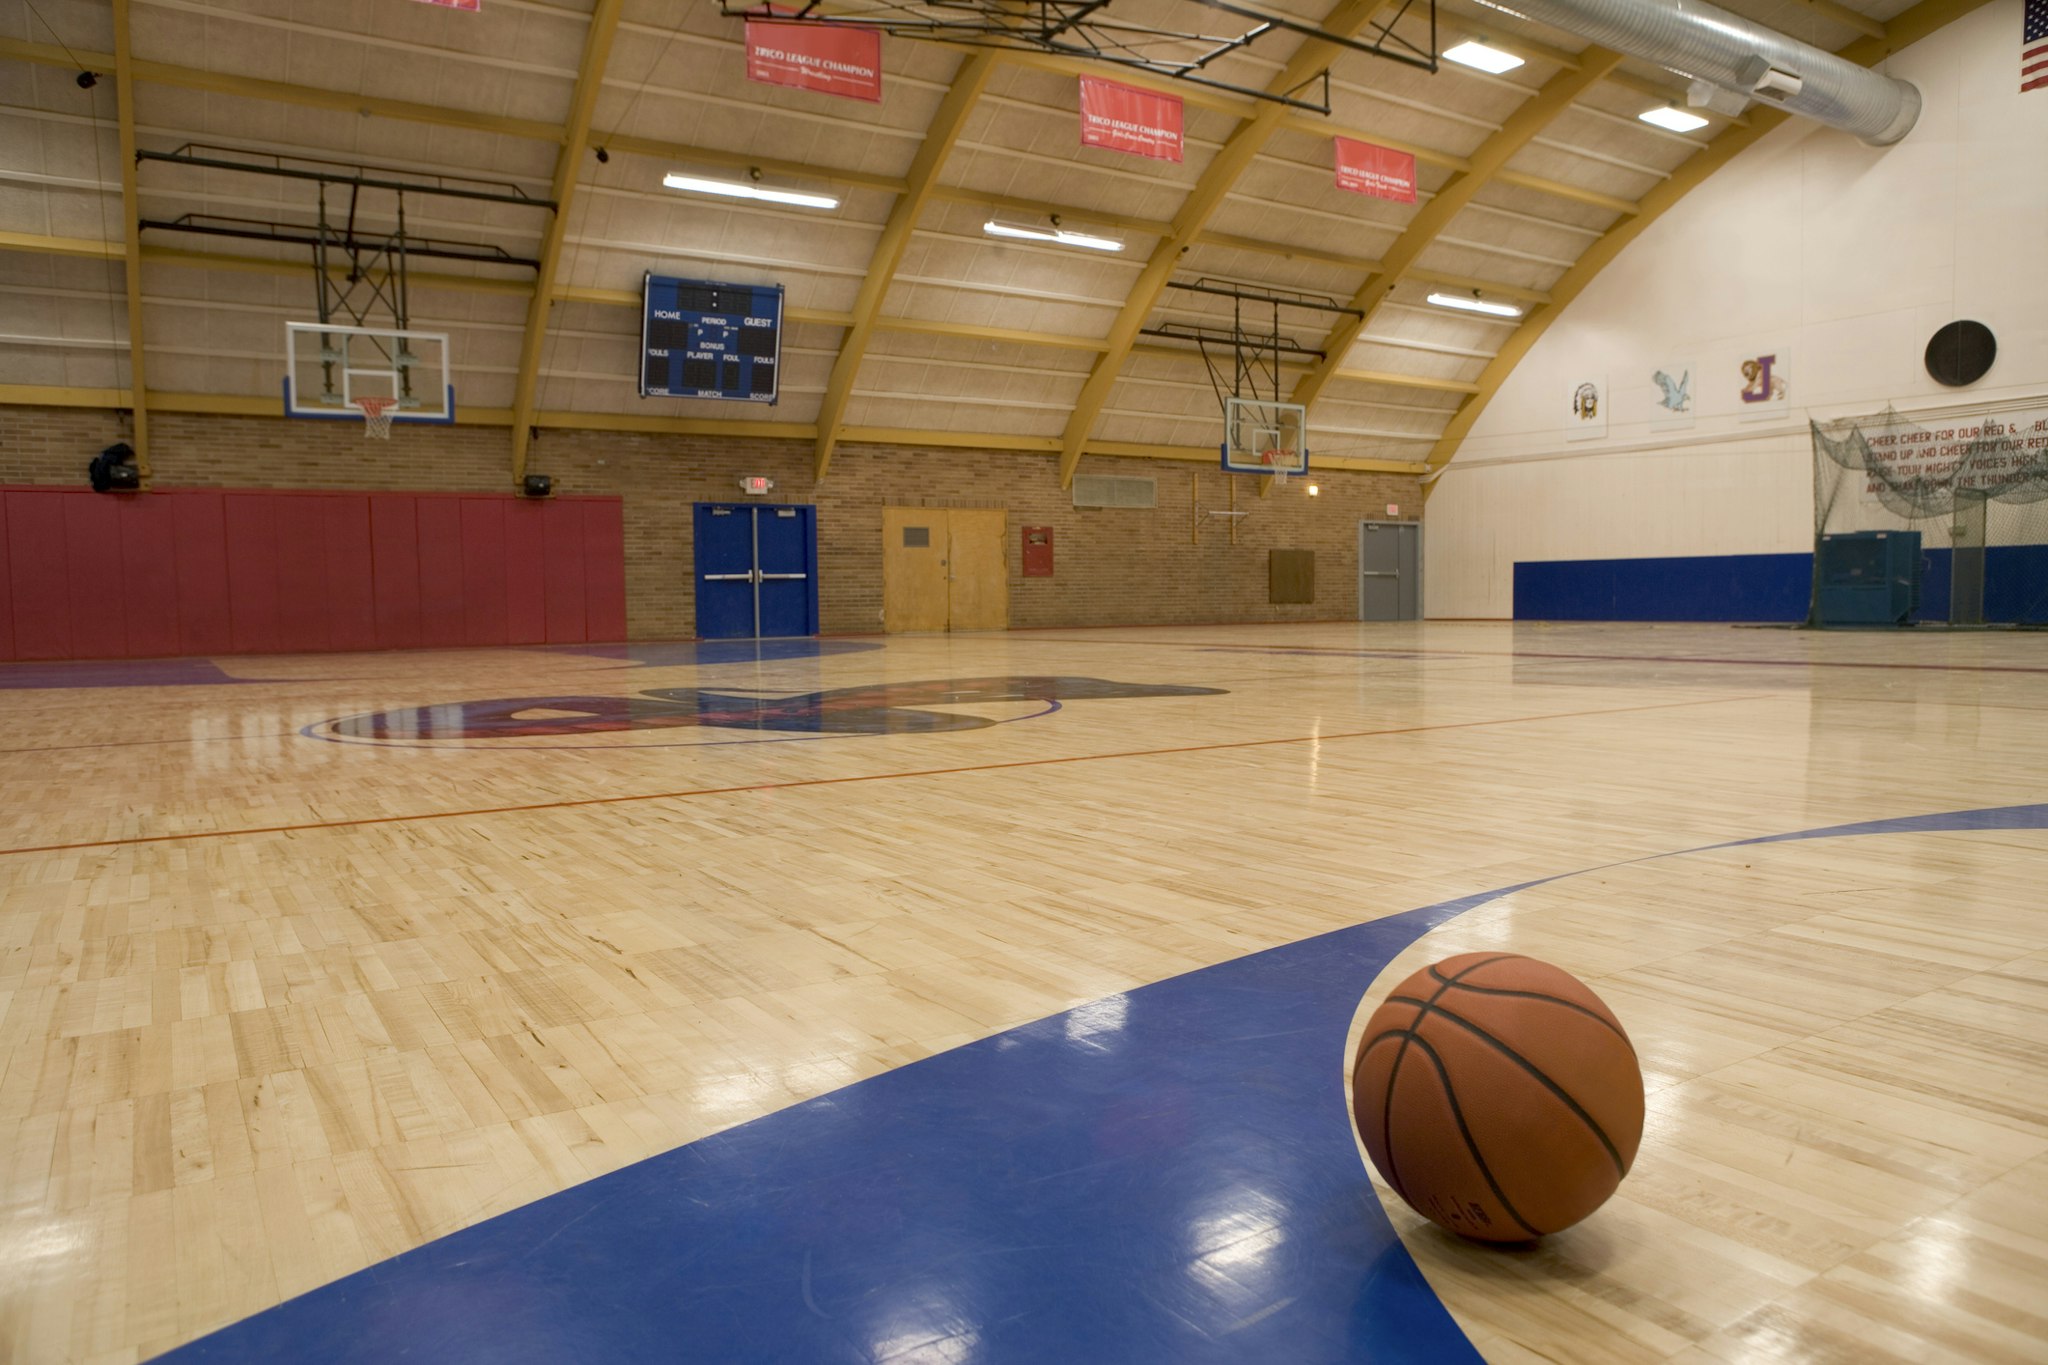 Basketball on gym floor - stock photo